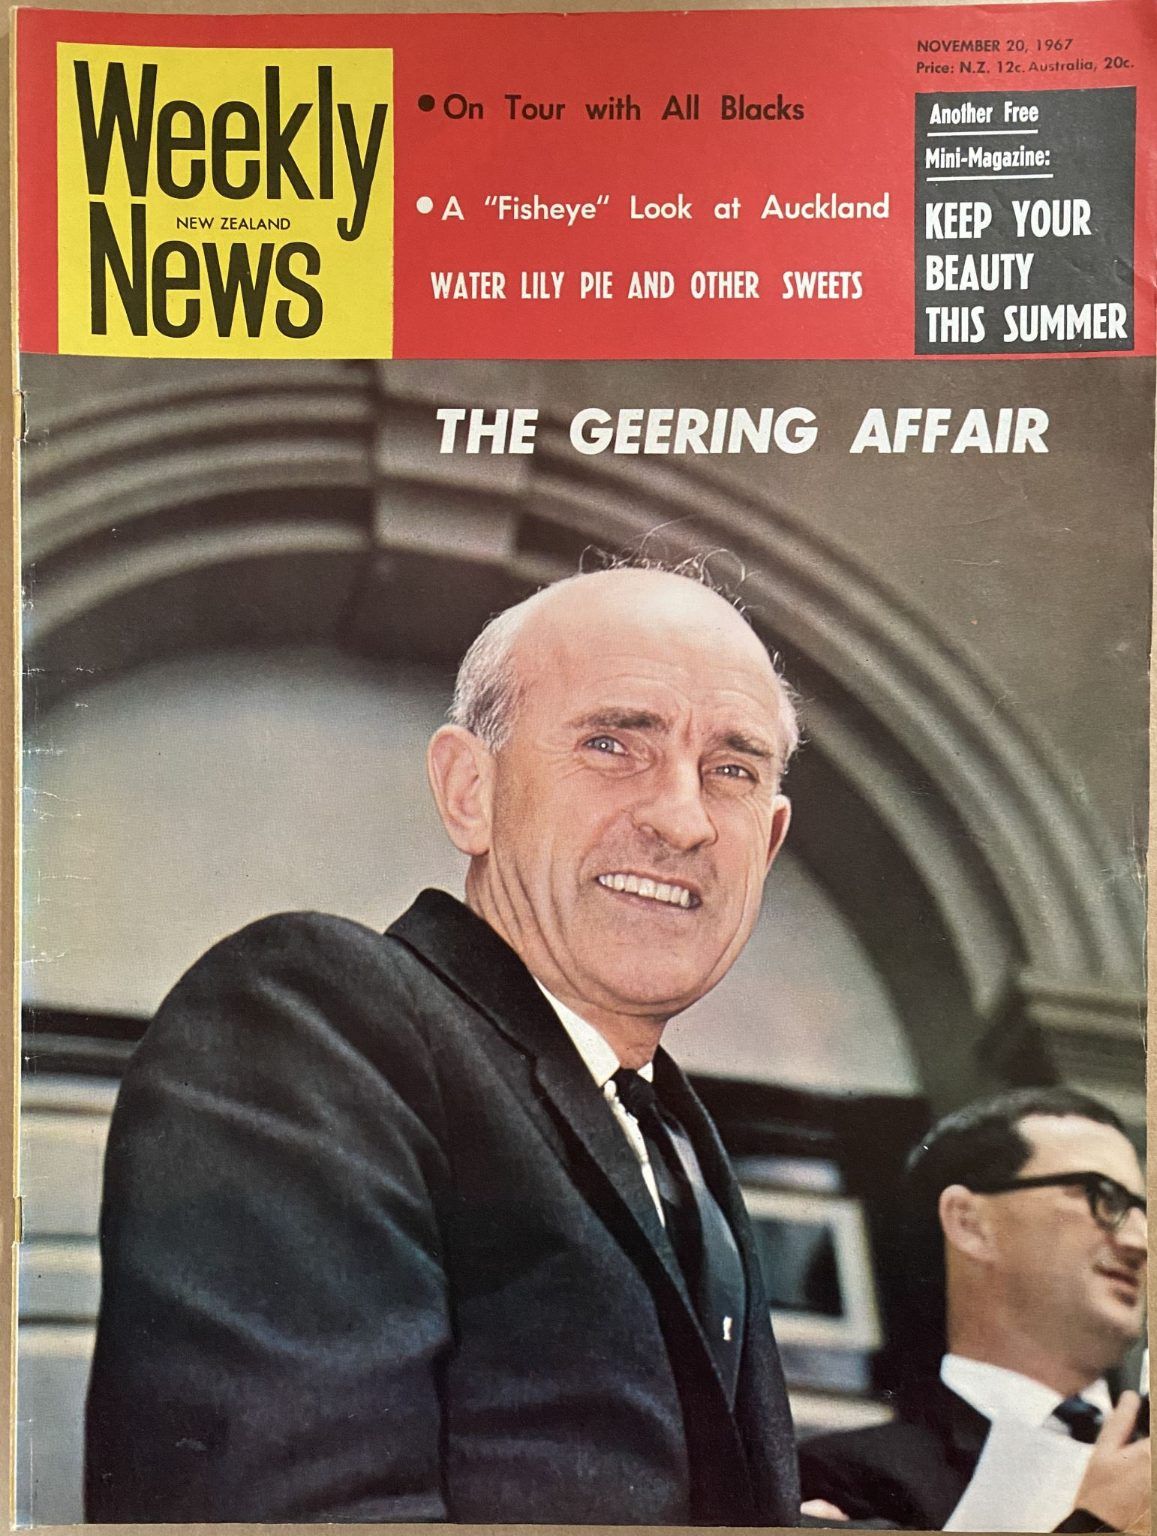 OLD NEWSPAPER: New Zealand Weekly News, No. 5425, 20 November 1967